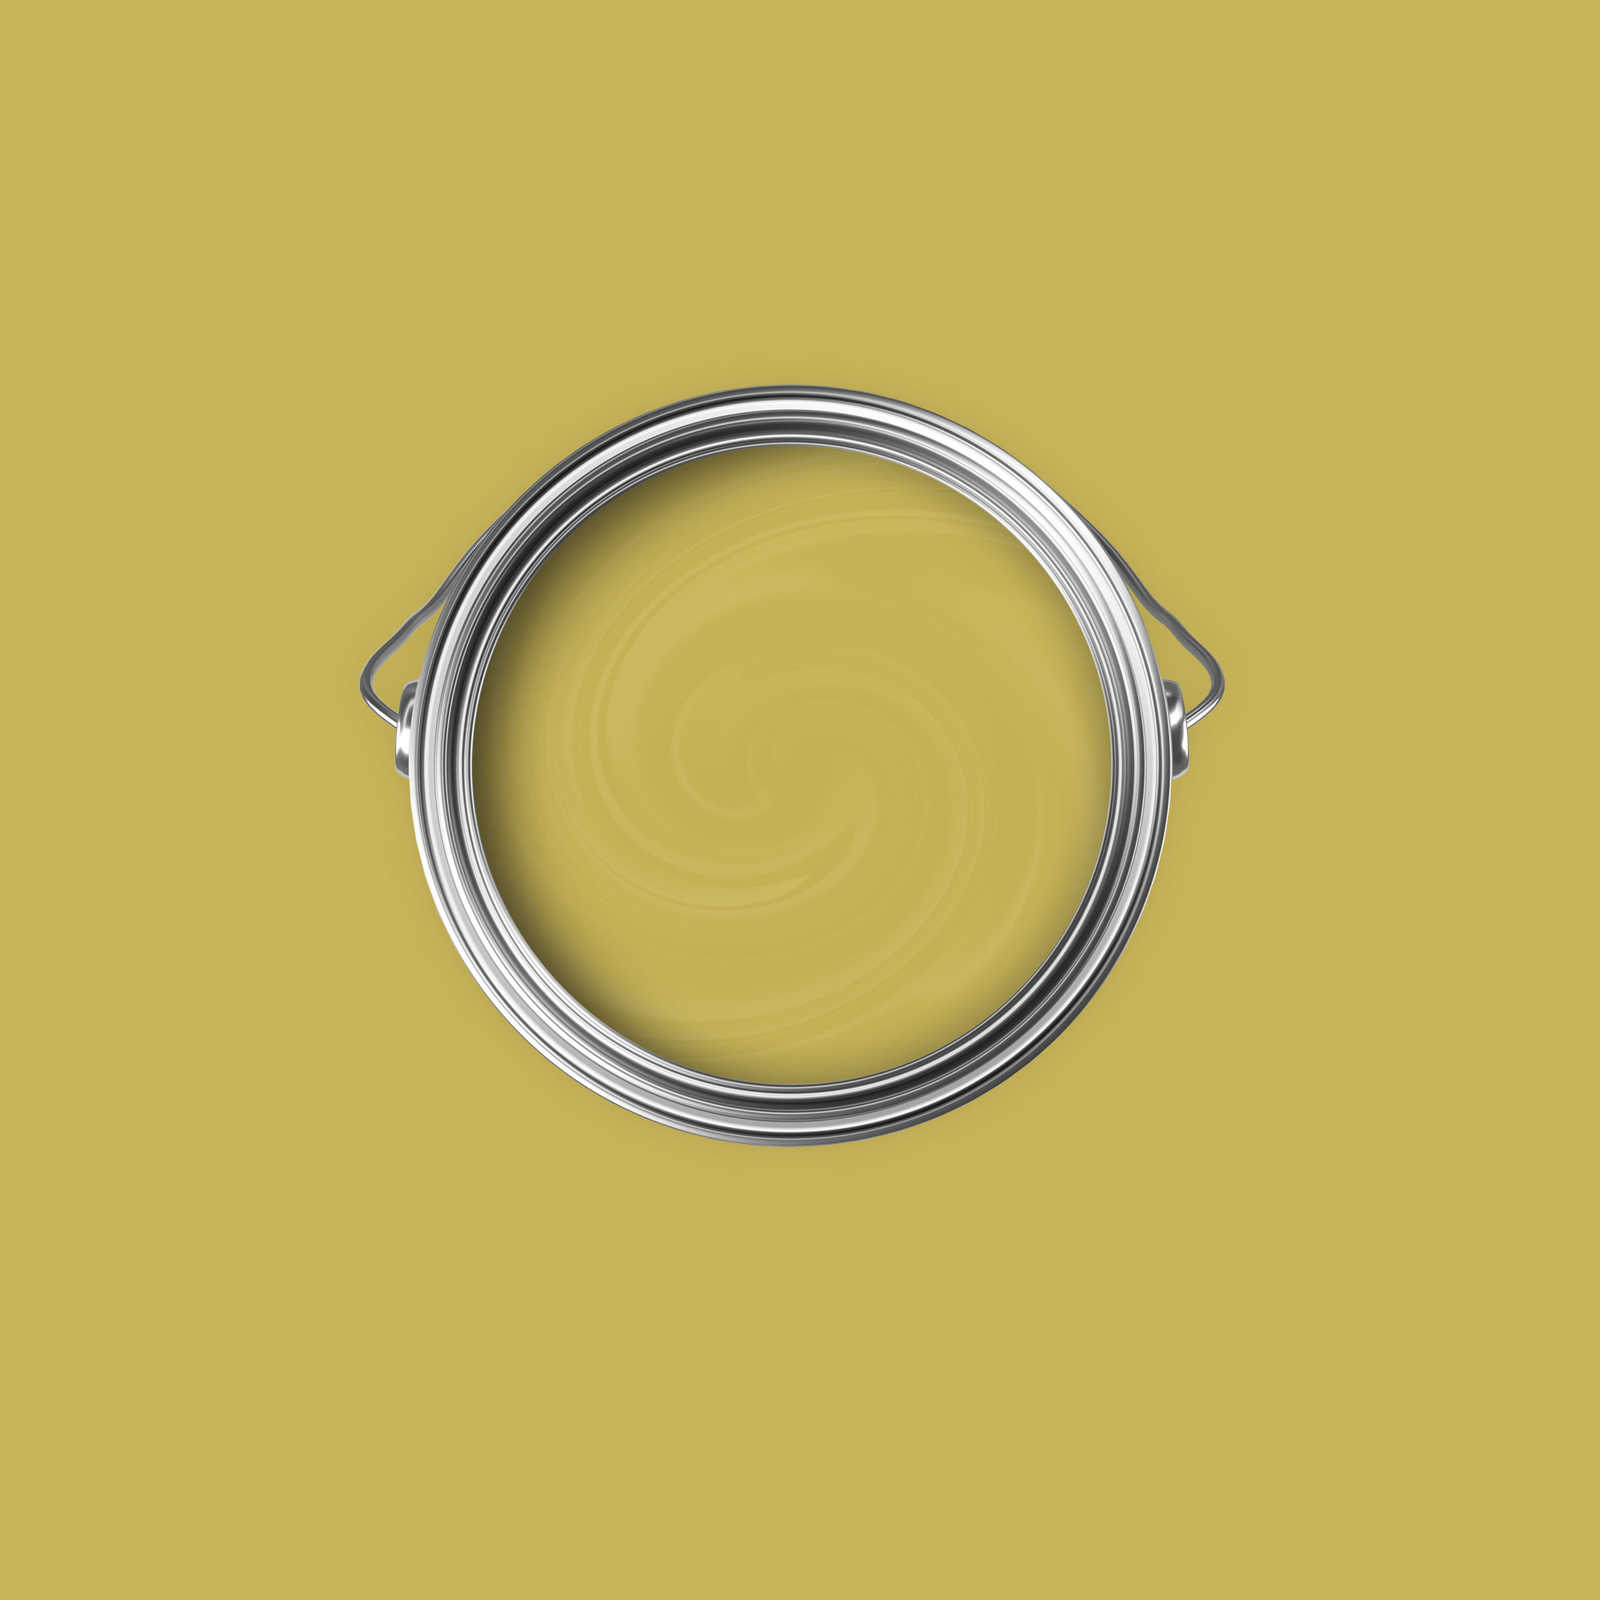             Premium Muurverf Radiant Pistachio »Lucky Lime« NW603 – 2,5 Liter
        